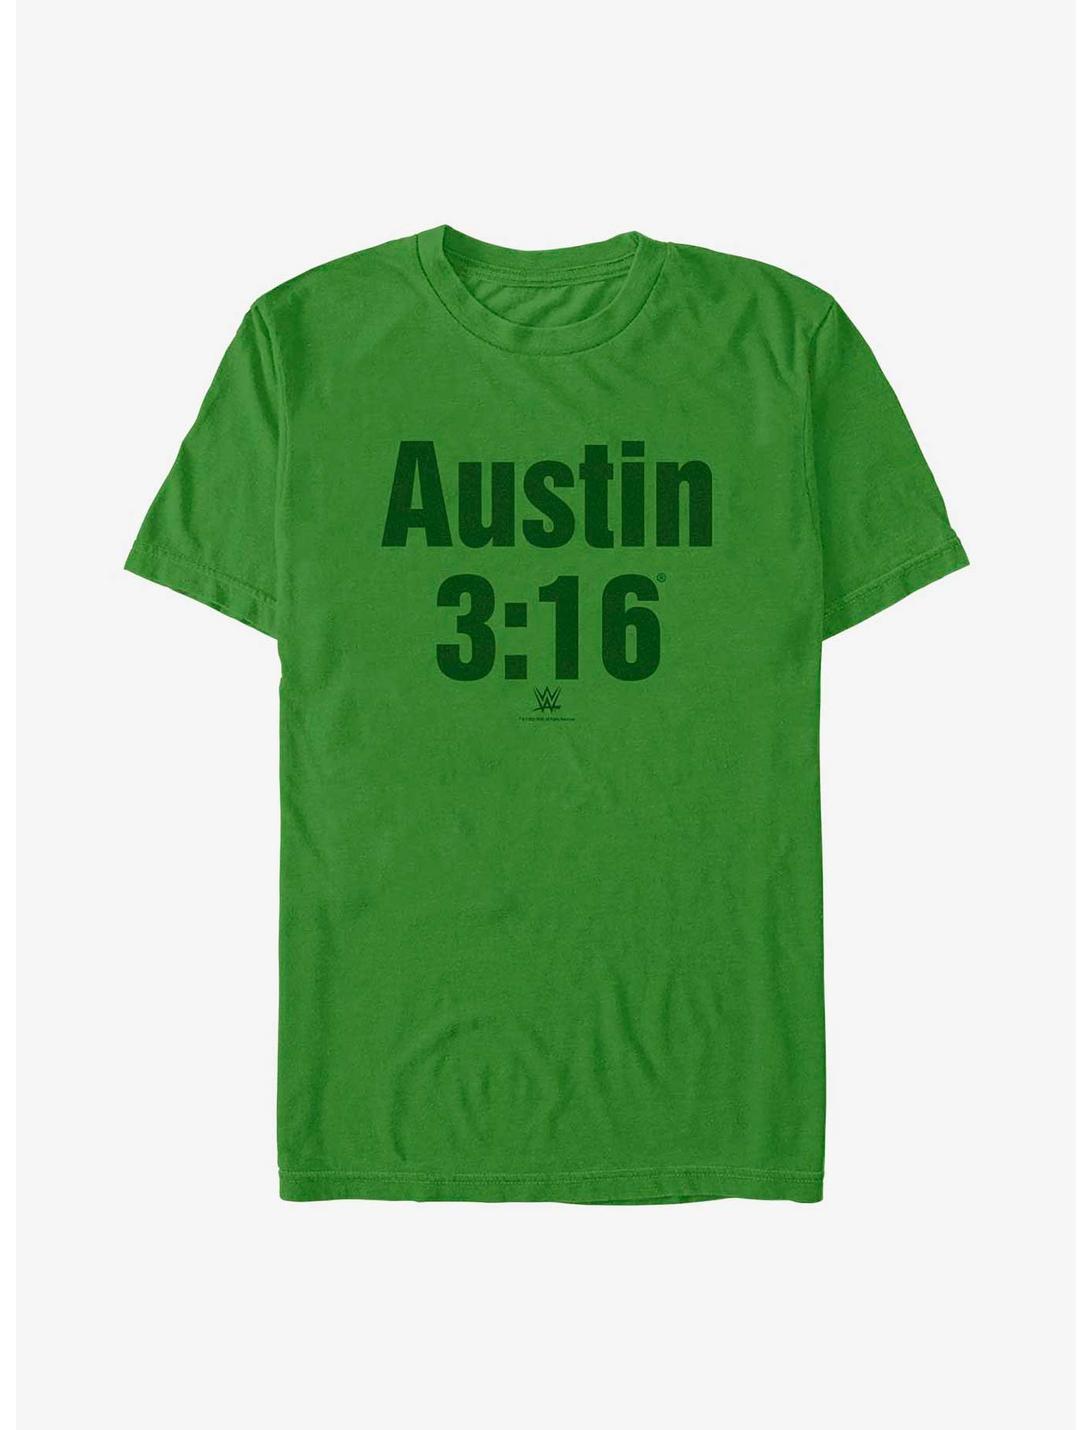 WWE Stone Cold Steve Austin 3:16 Green Era T-Shirt, KELLY, hi-res